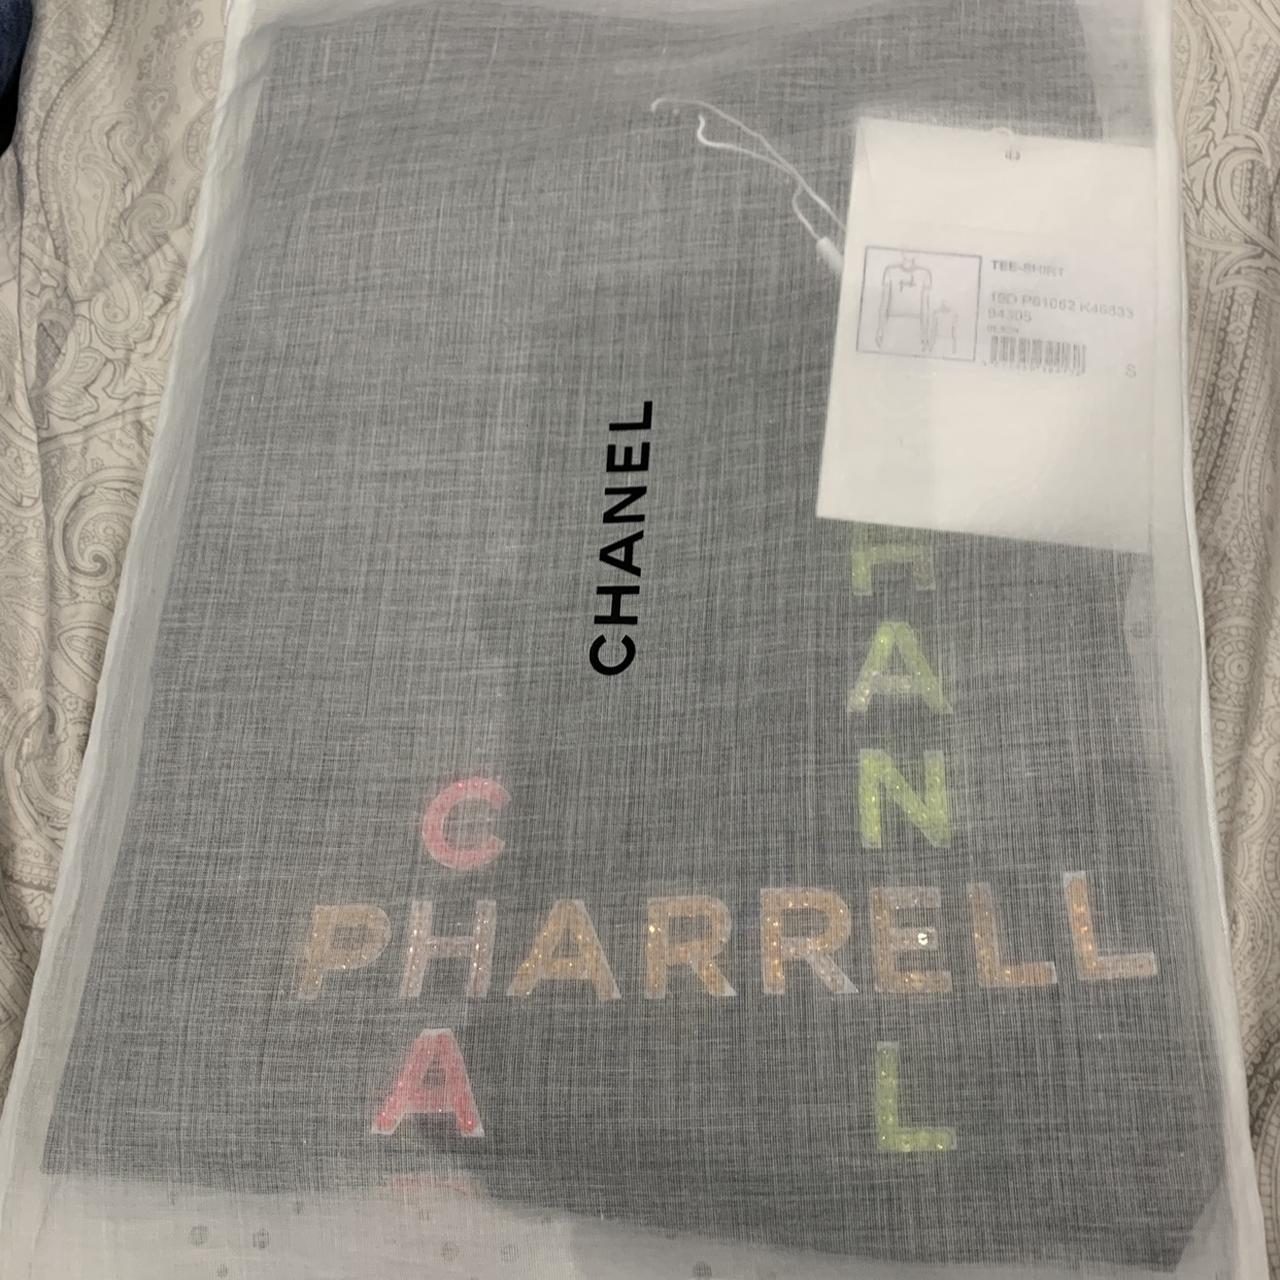 Chanel pharrell capsule collection White T-shirt - Depop